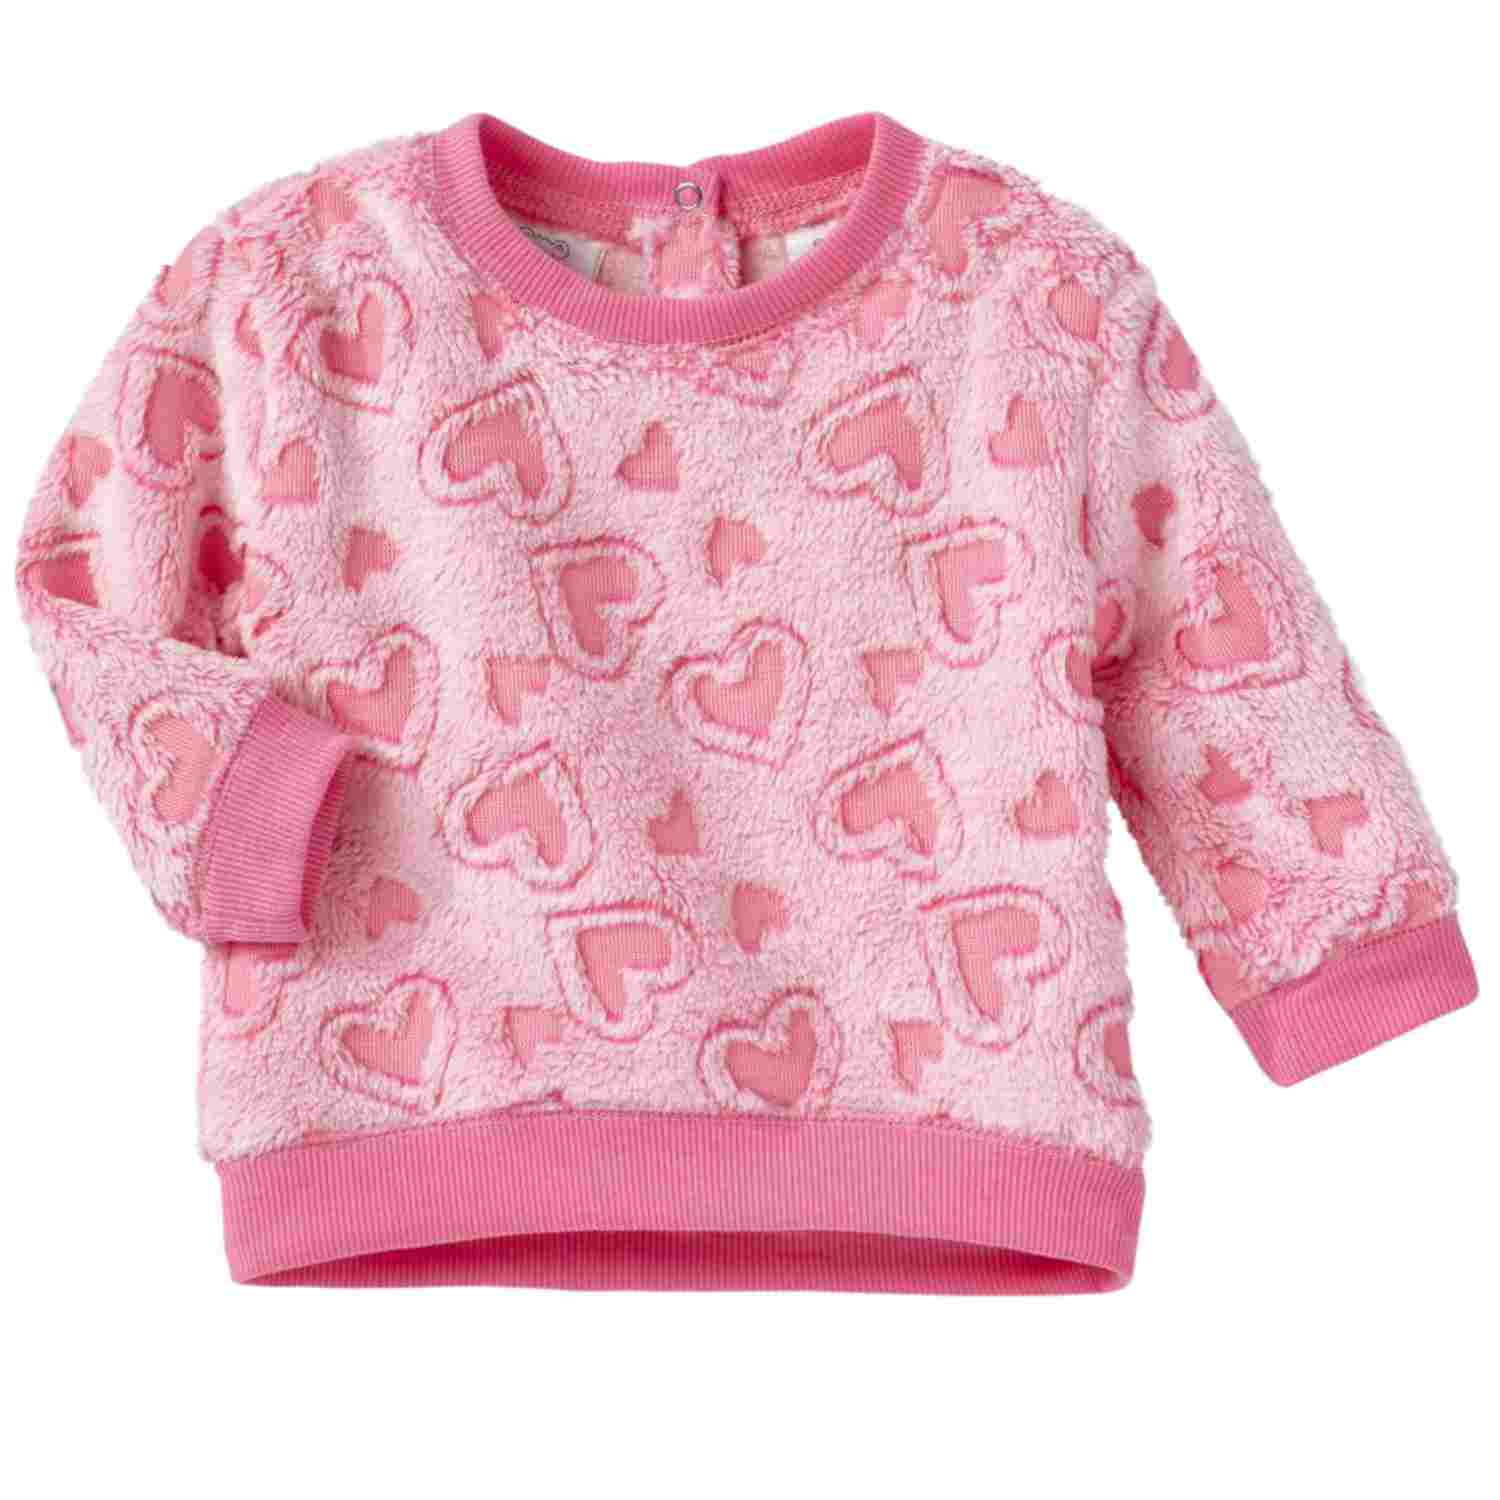 Dujiea Llama Cactus Pink Hoodies Hoody Pullover Sweatshirts with Pockets for Girls Boys Kids